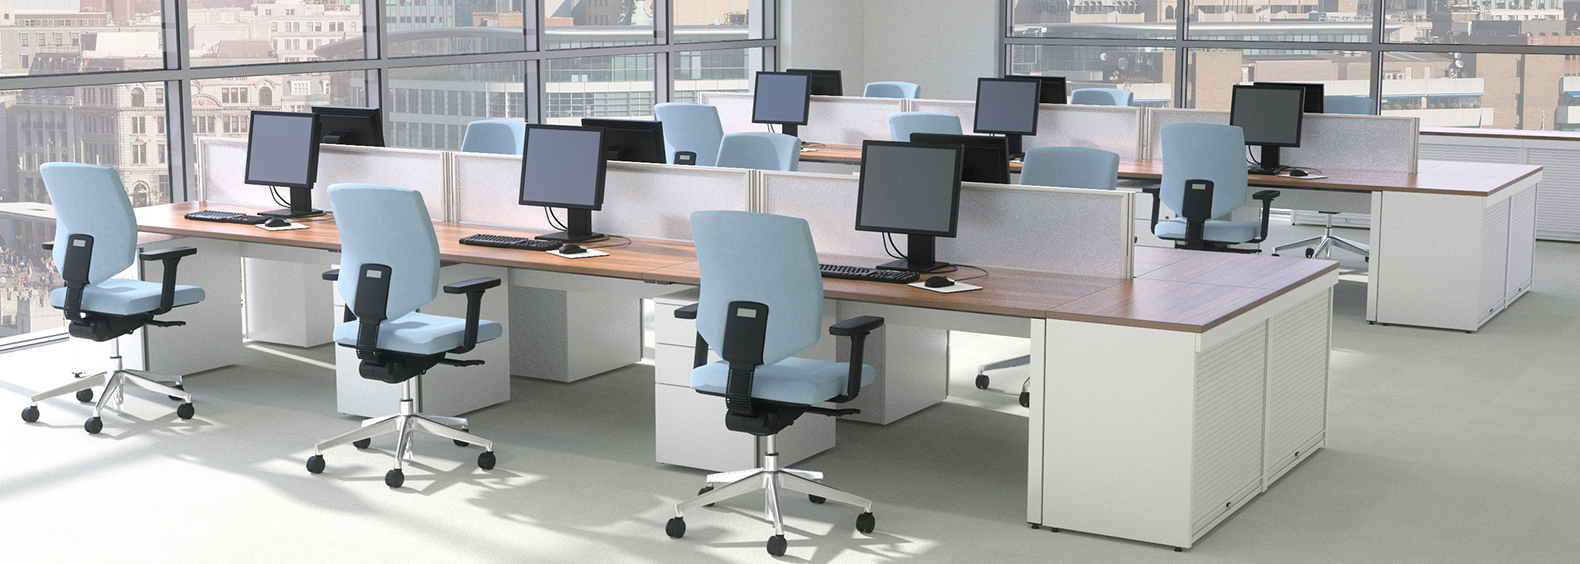 Ambus-desk-office-furniture-range